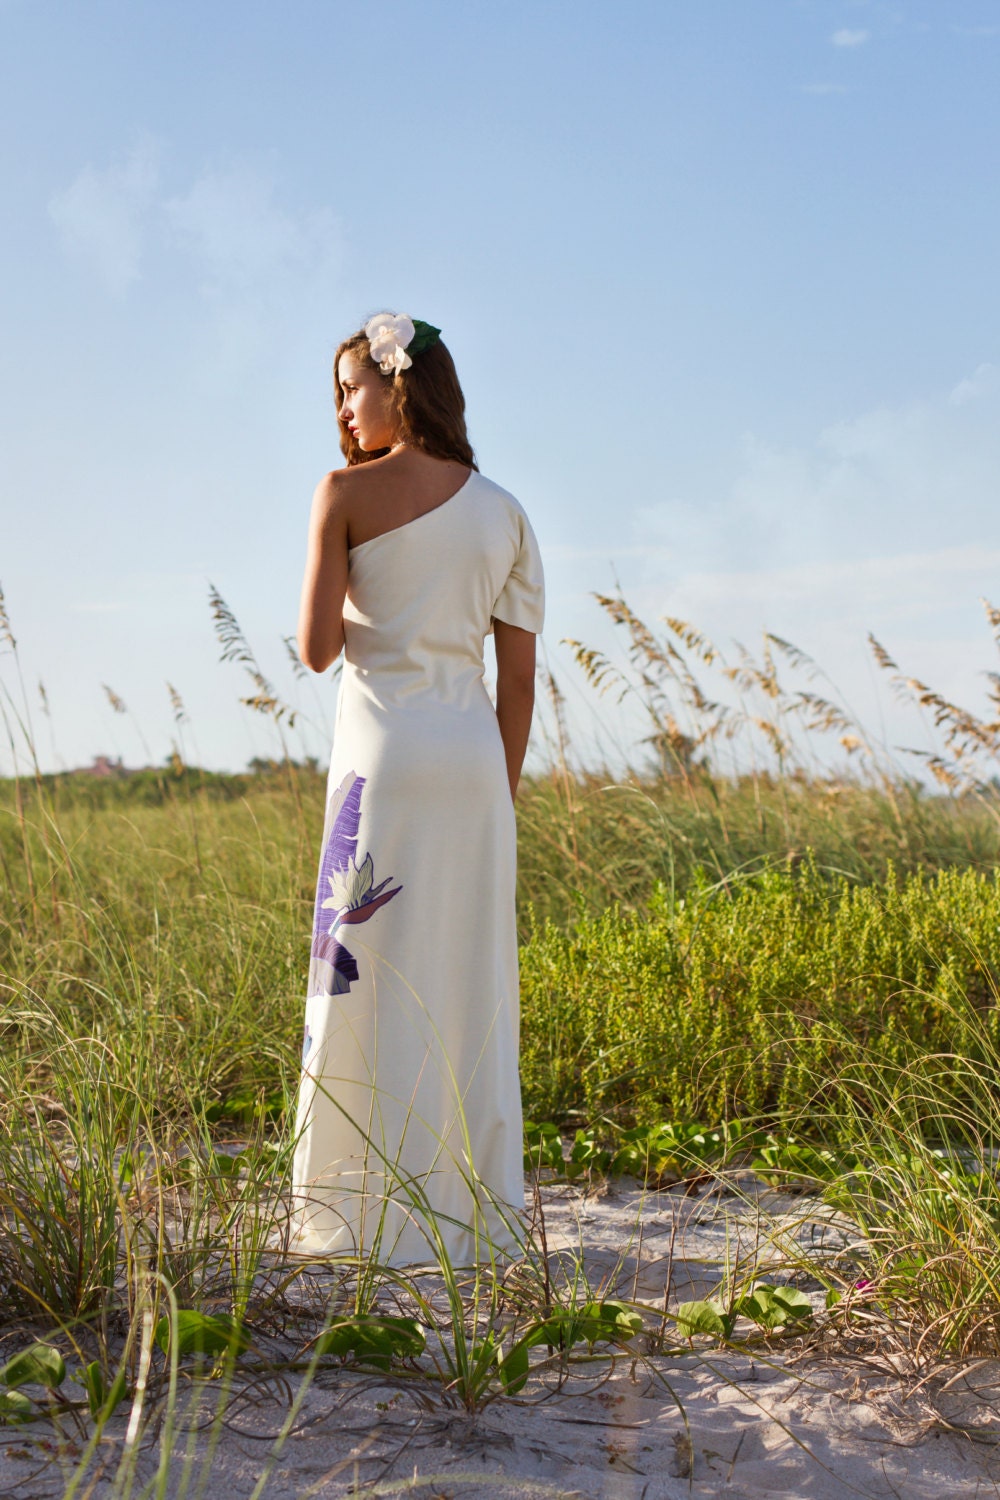 The Most Beautiful Hawaiian Wedding Dress Design